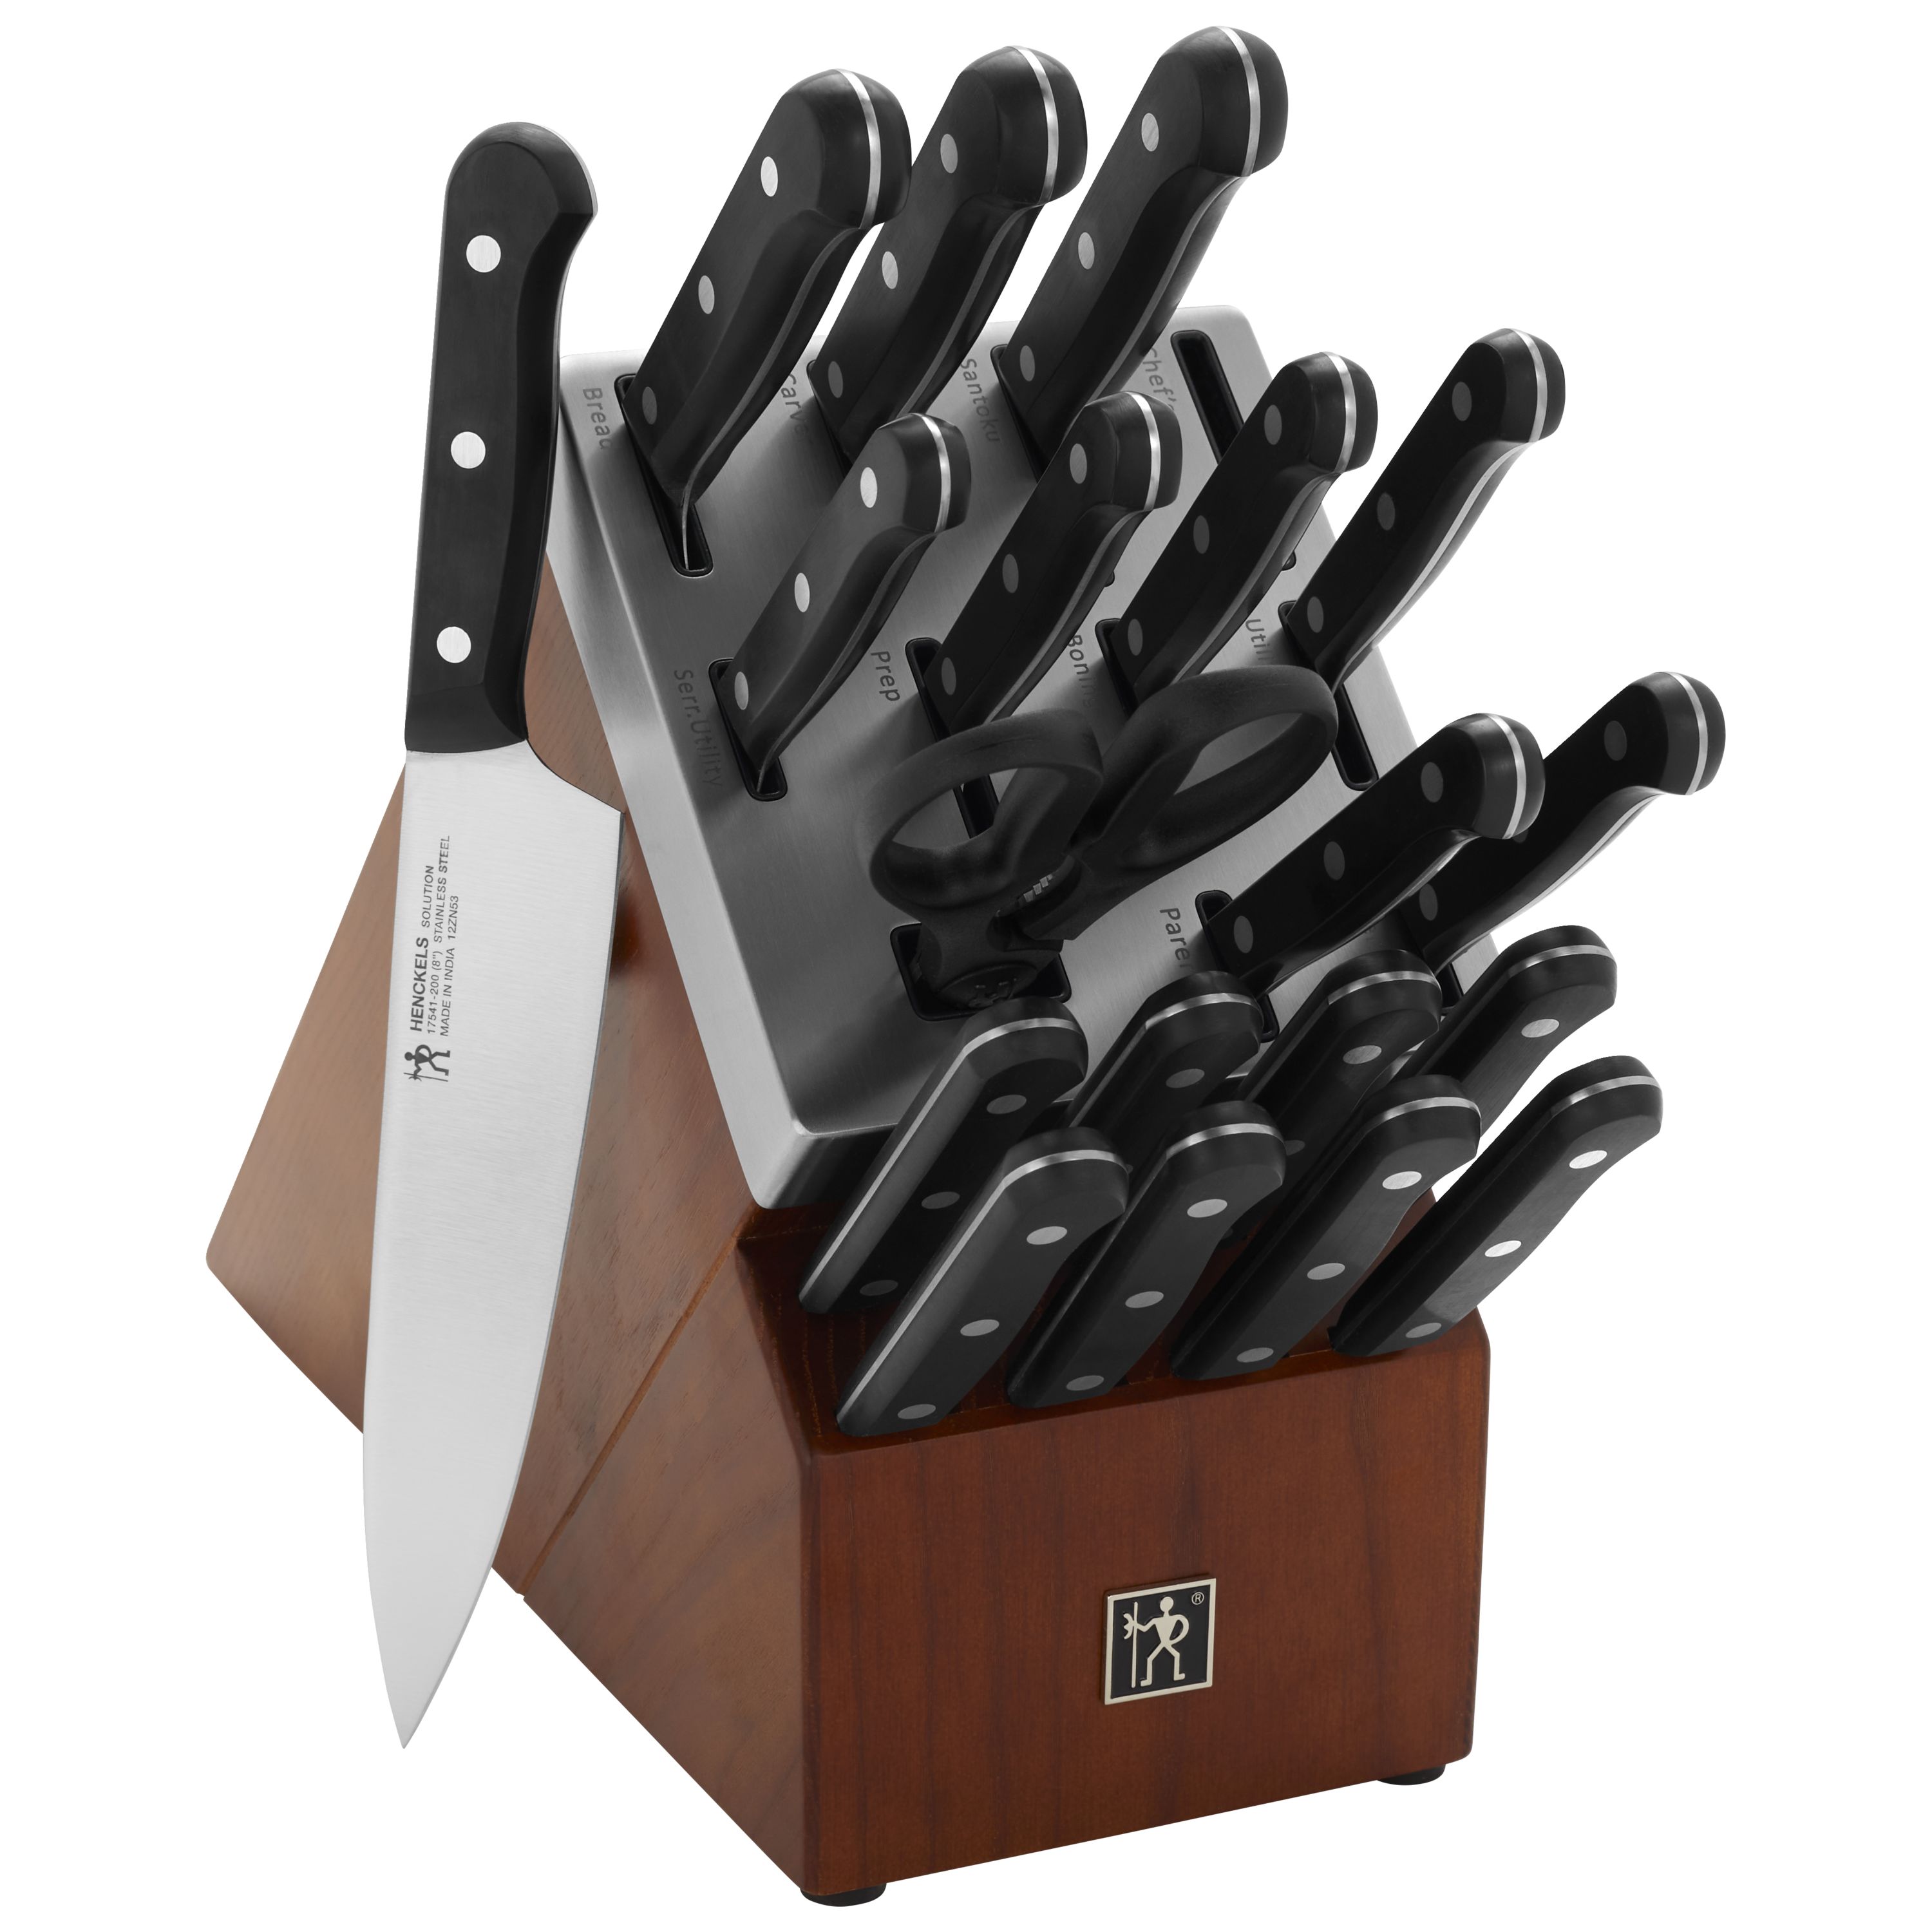 HENCKELS Solution Steak Knife Set, 8-piece, Black/Stainless Steel